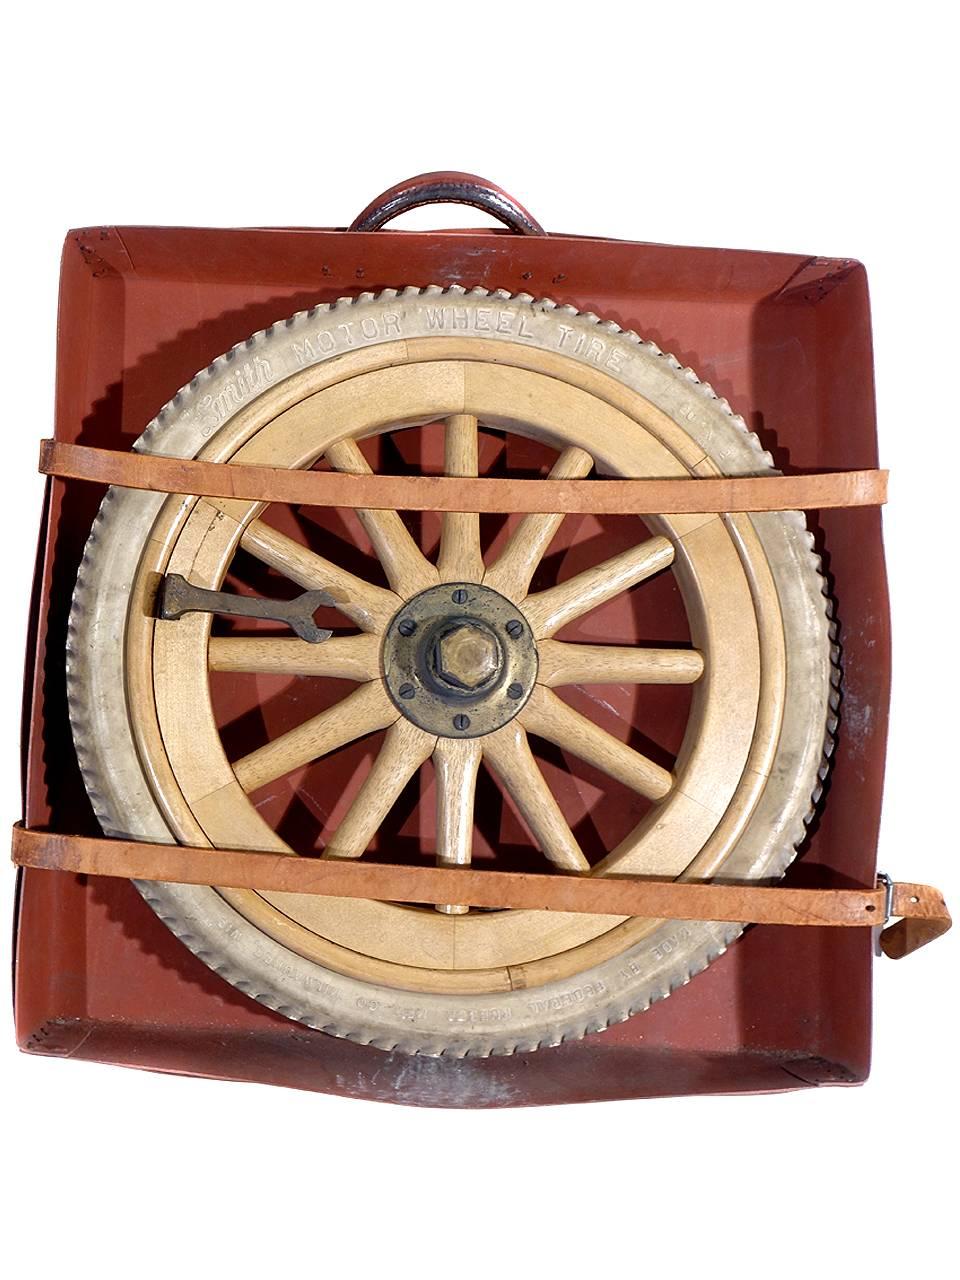 smith motor wheel for sale